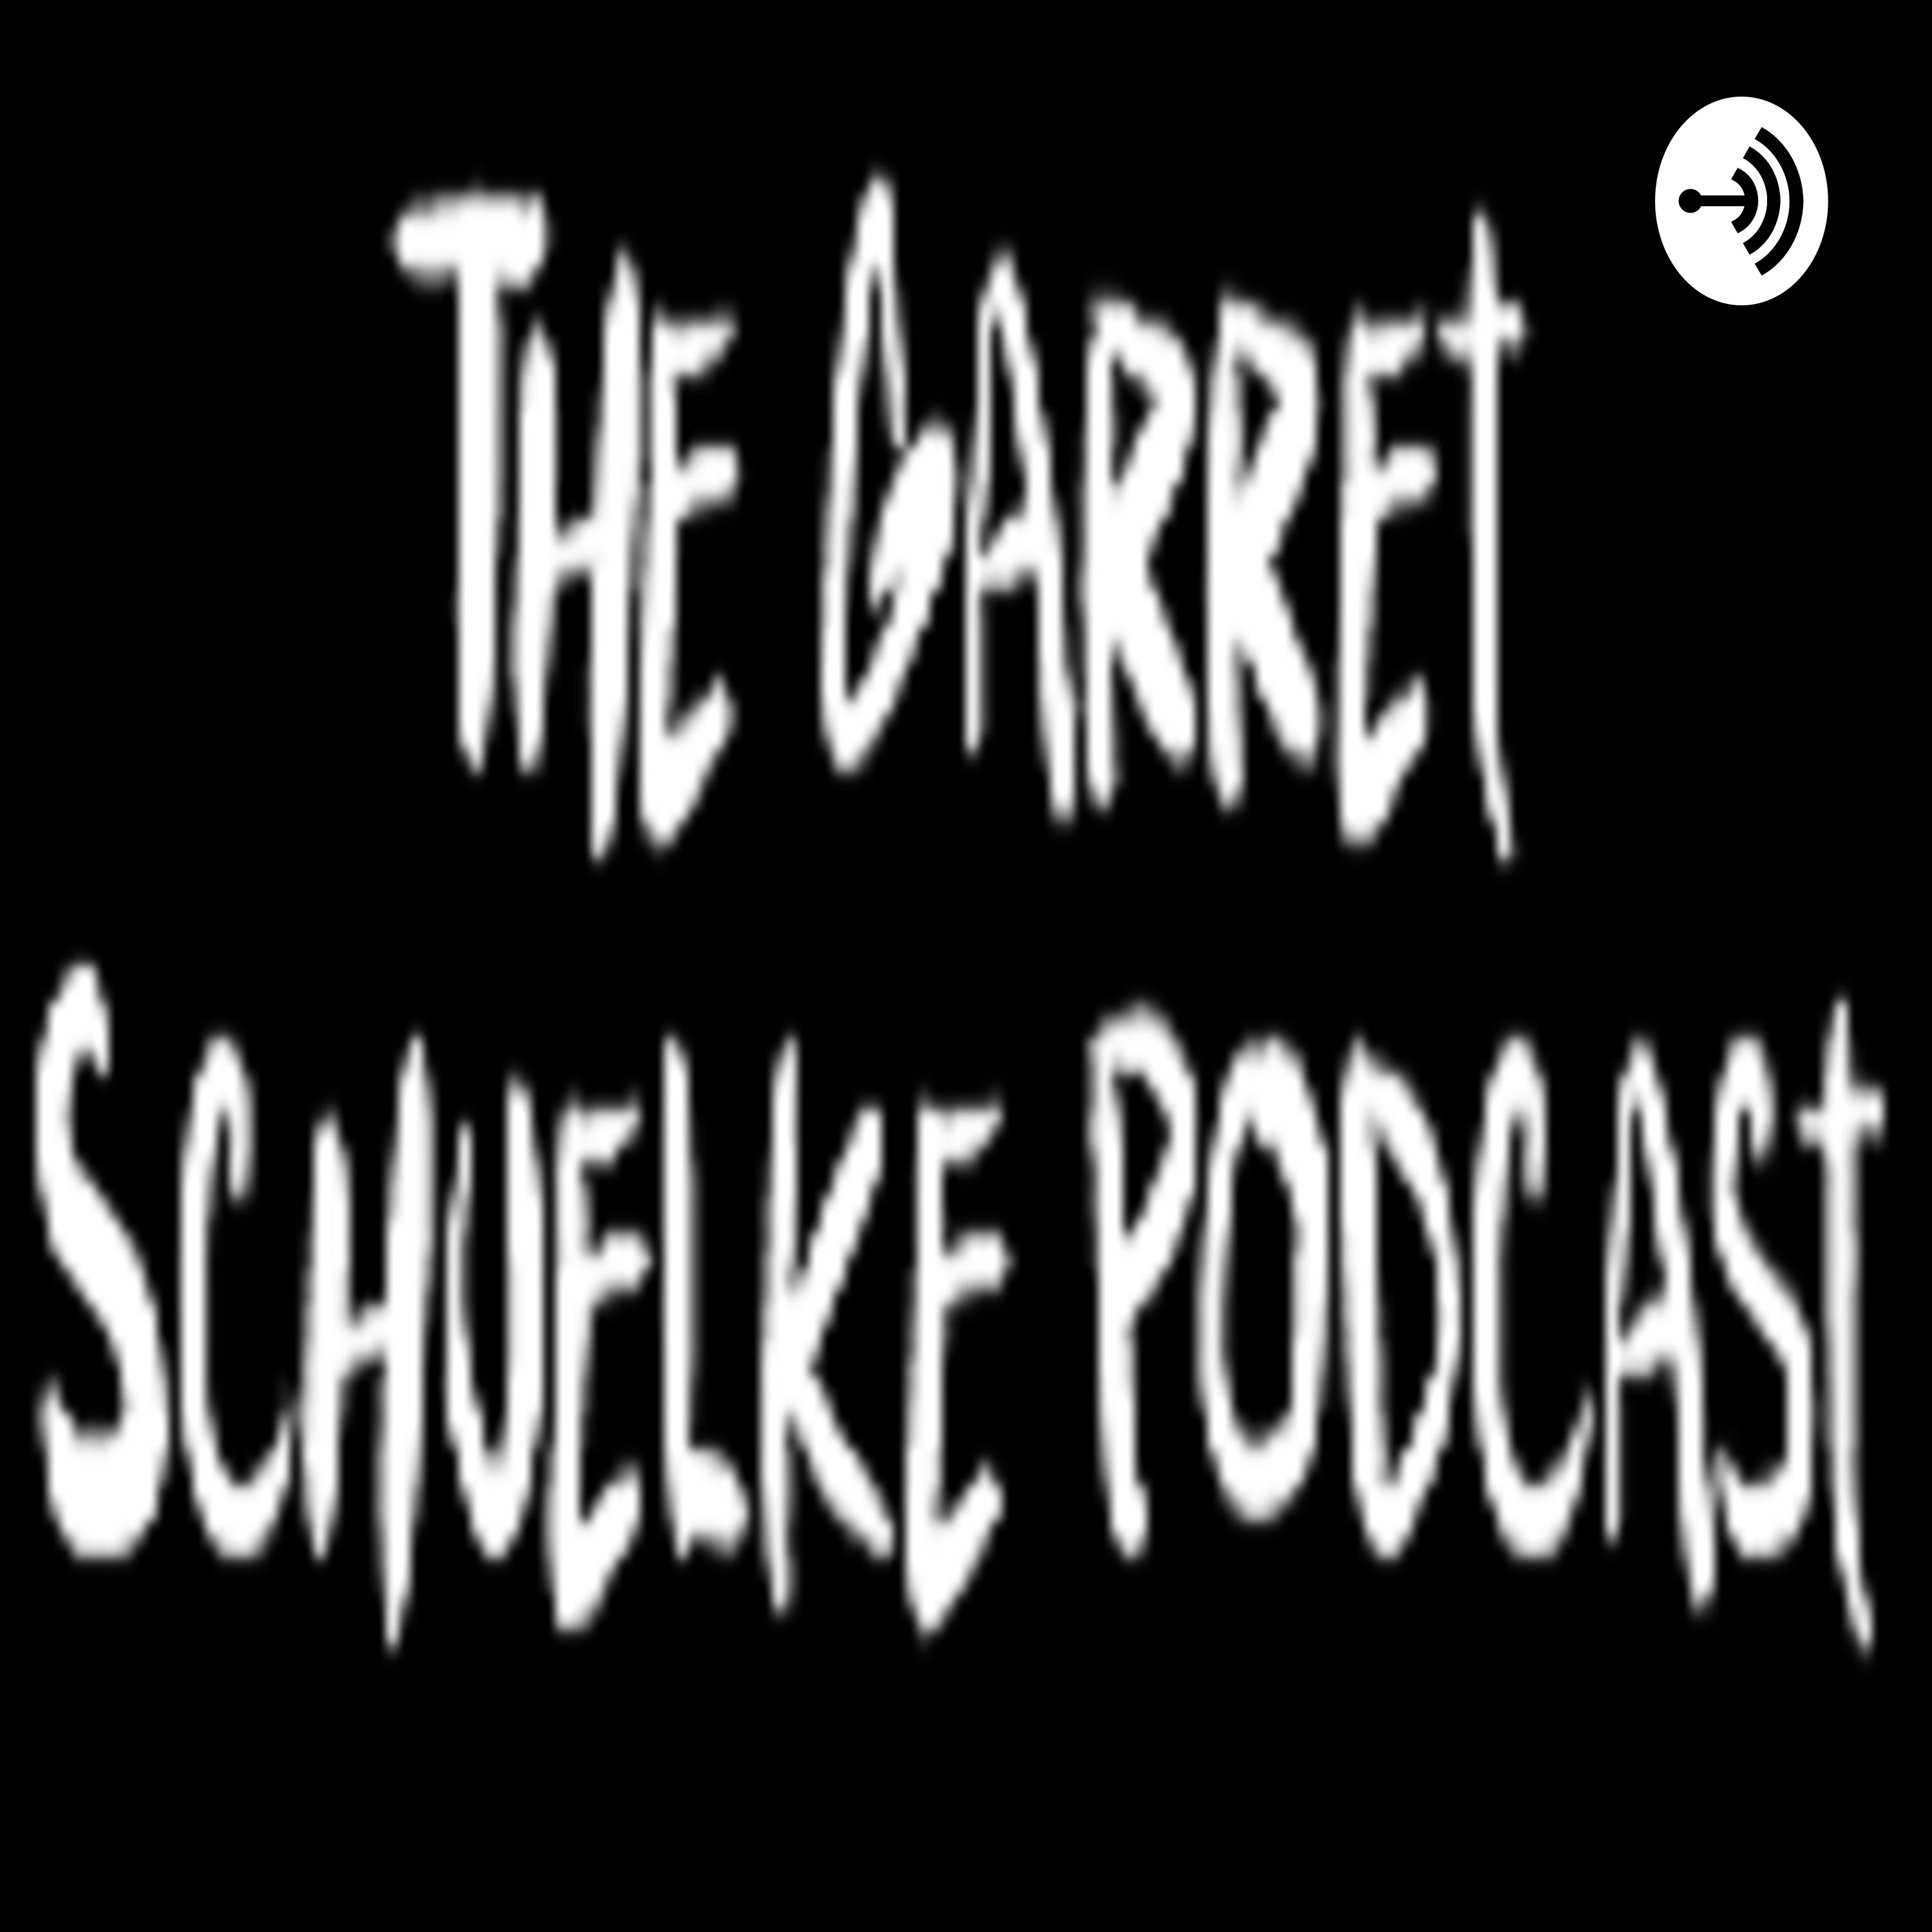 The Garret Schuelke Podcast Episode 35: Black Suppository with Zach Elmblad